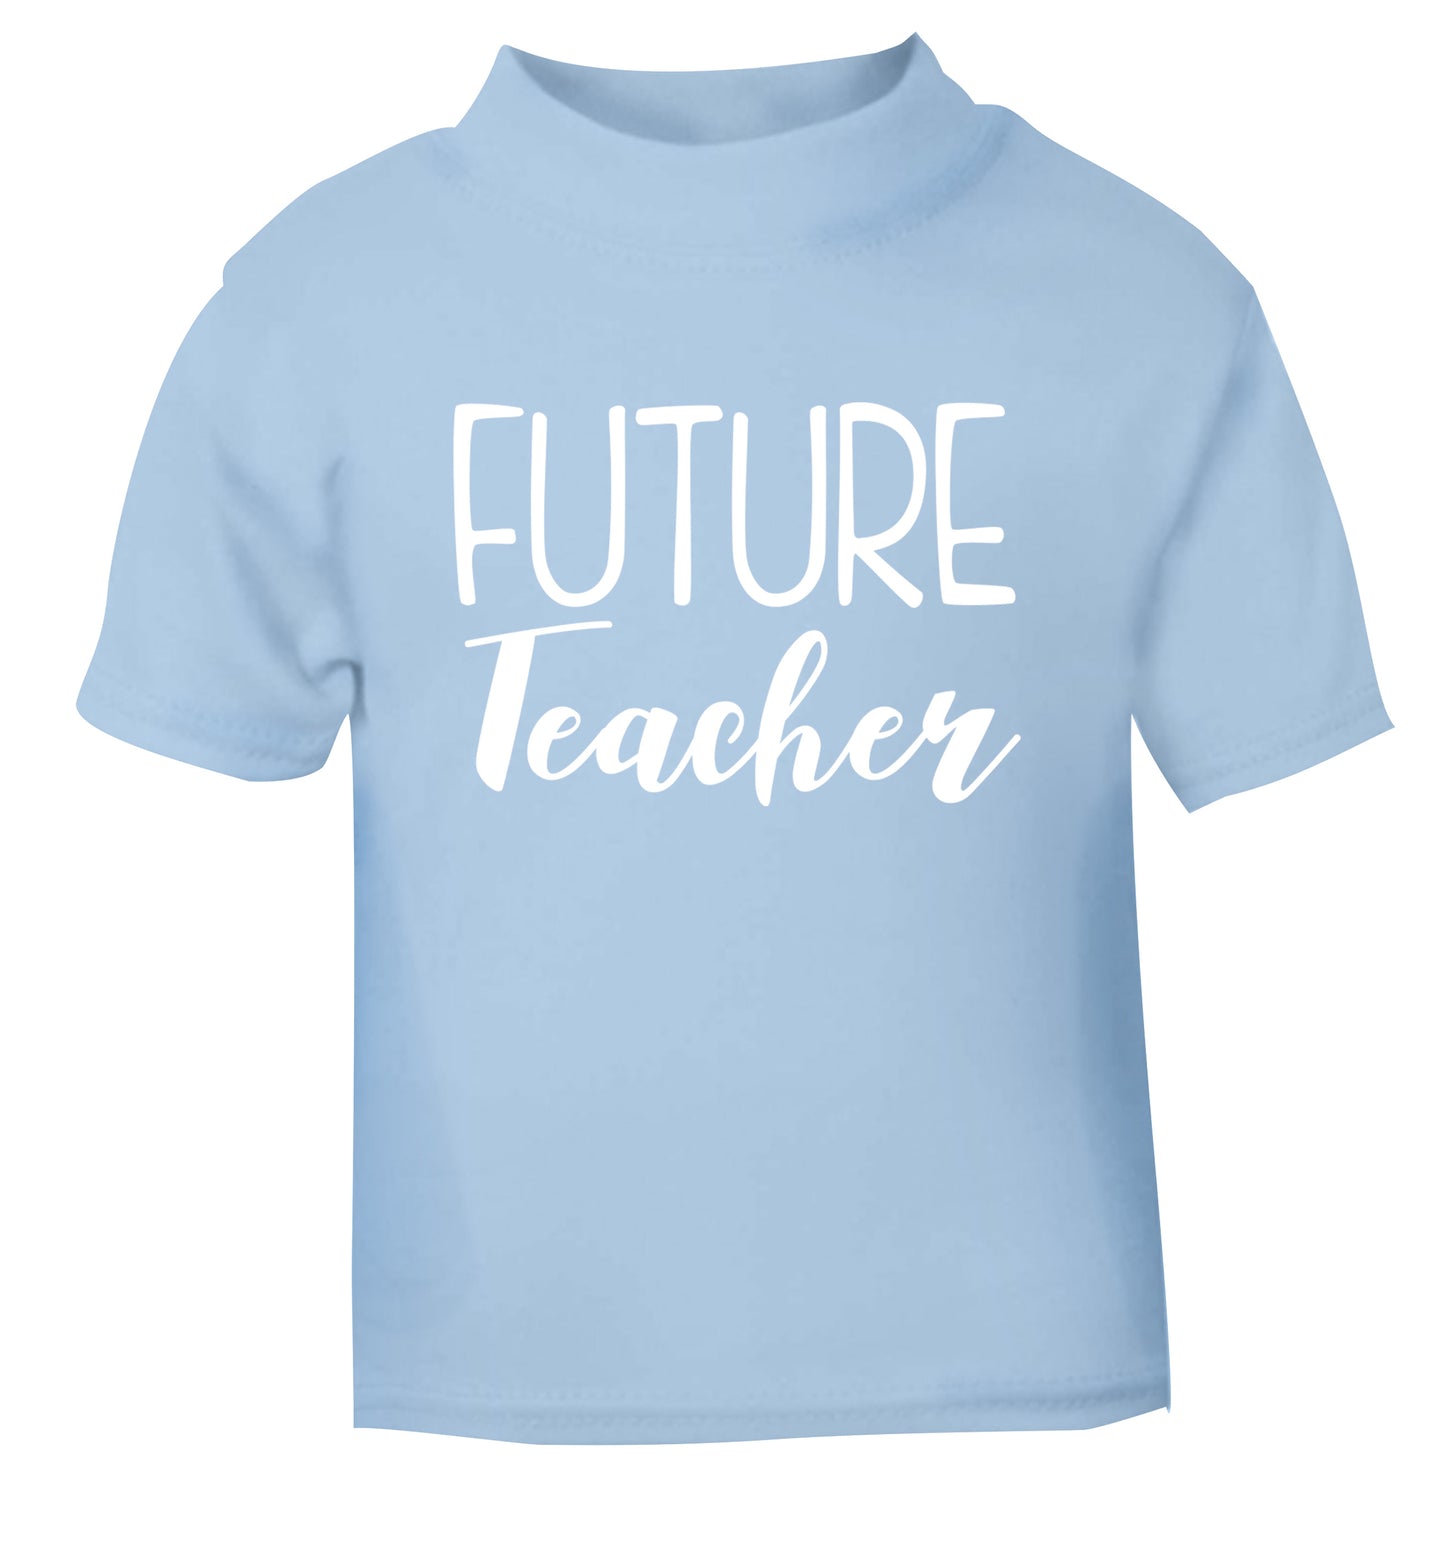 Future teacher light blue Baby Toddler Tshirt 2 Years